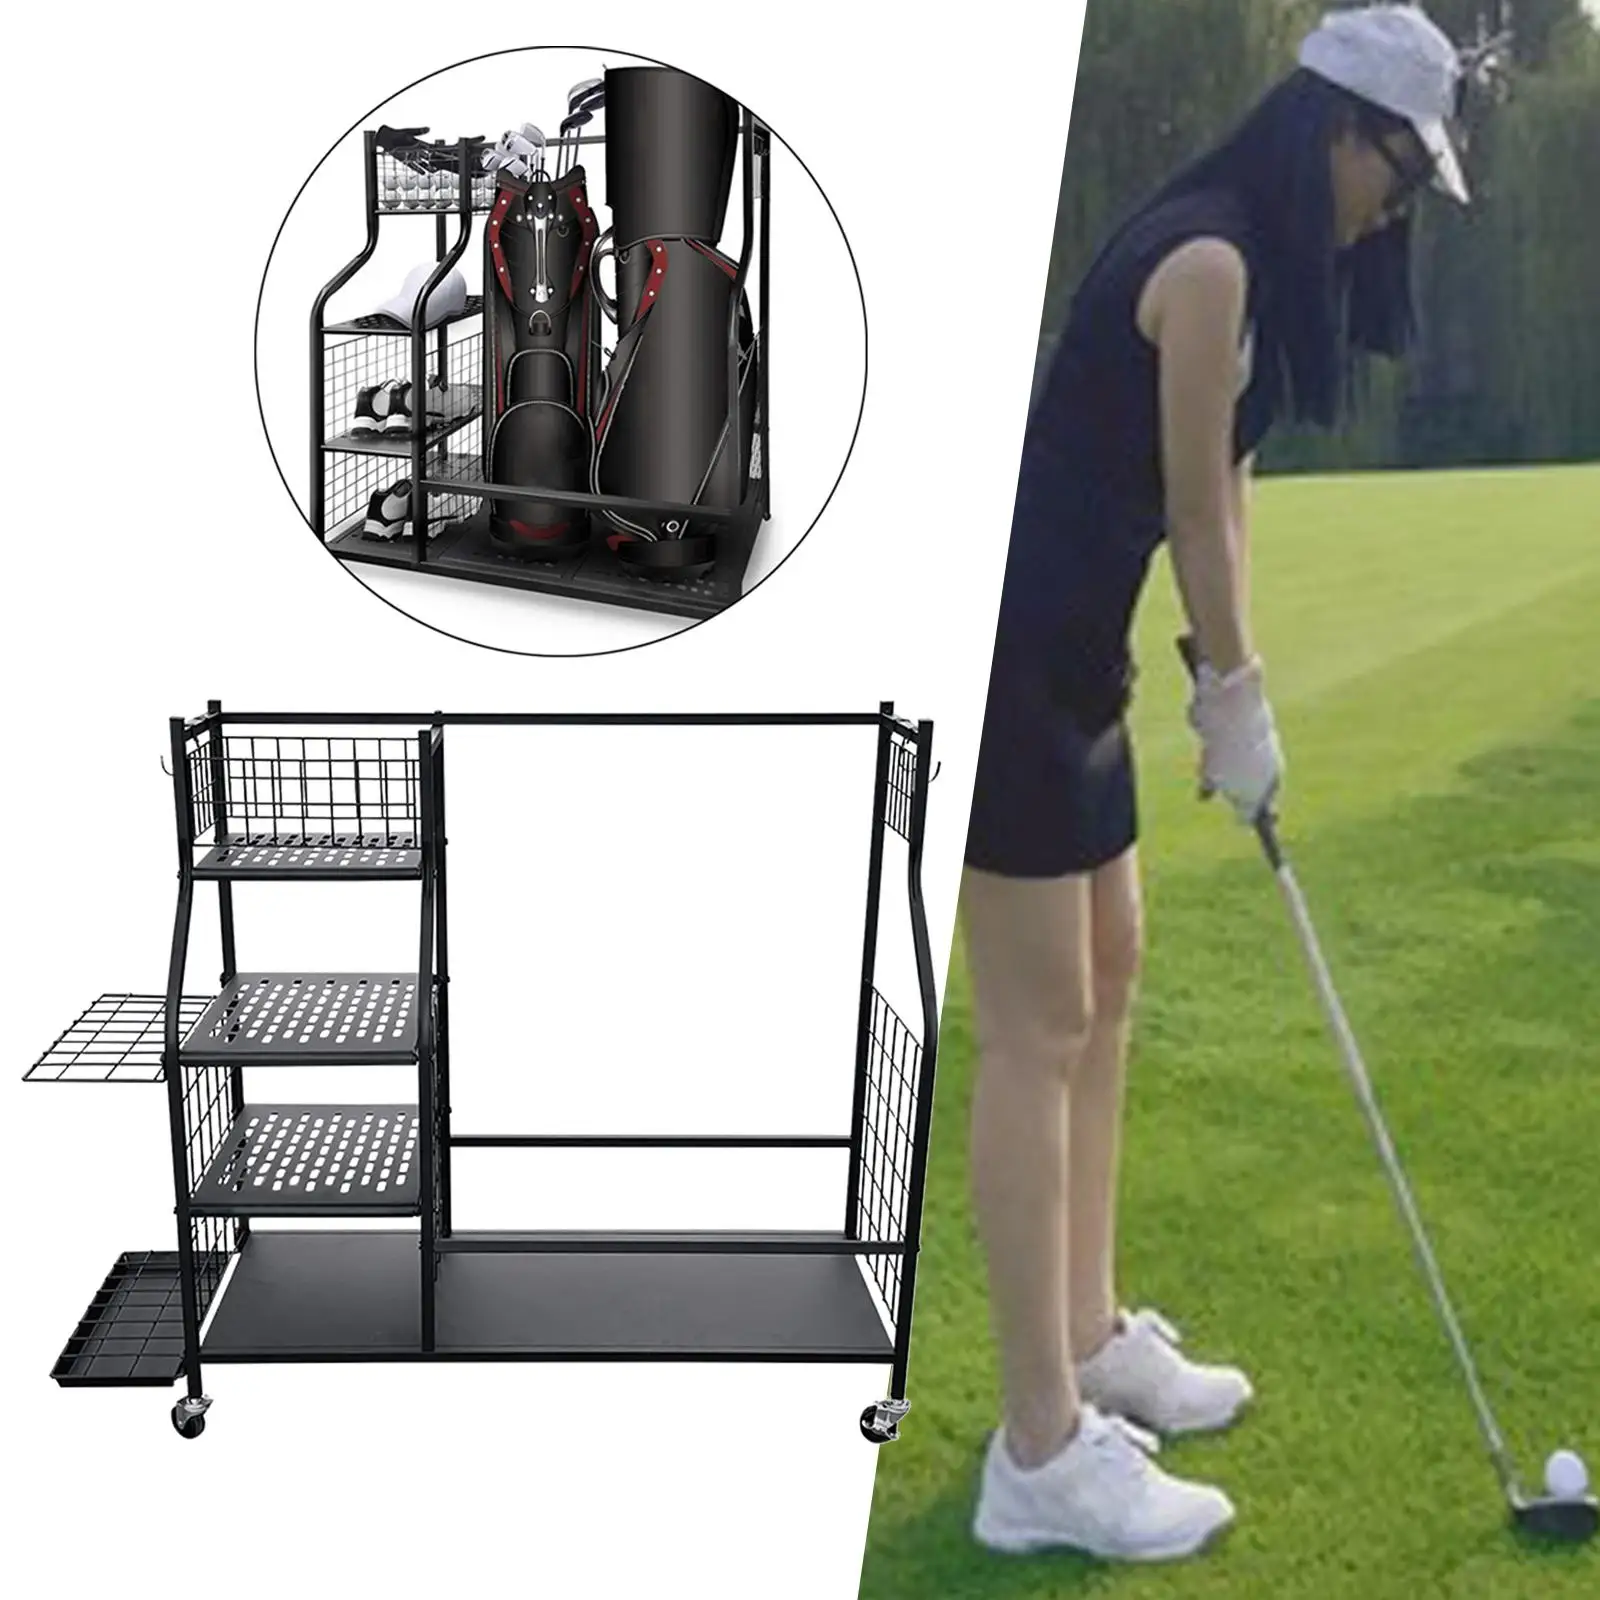 

Golf Bag Storage Rack Golf Storage Garage Organizer Golf Bag Organizer for Golfing Equipment Golf Clubs Organization Shed Balls